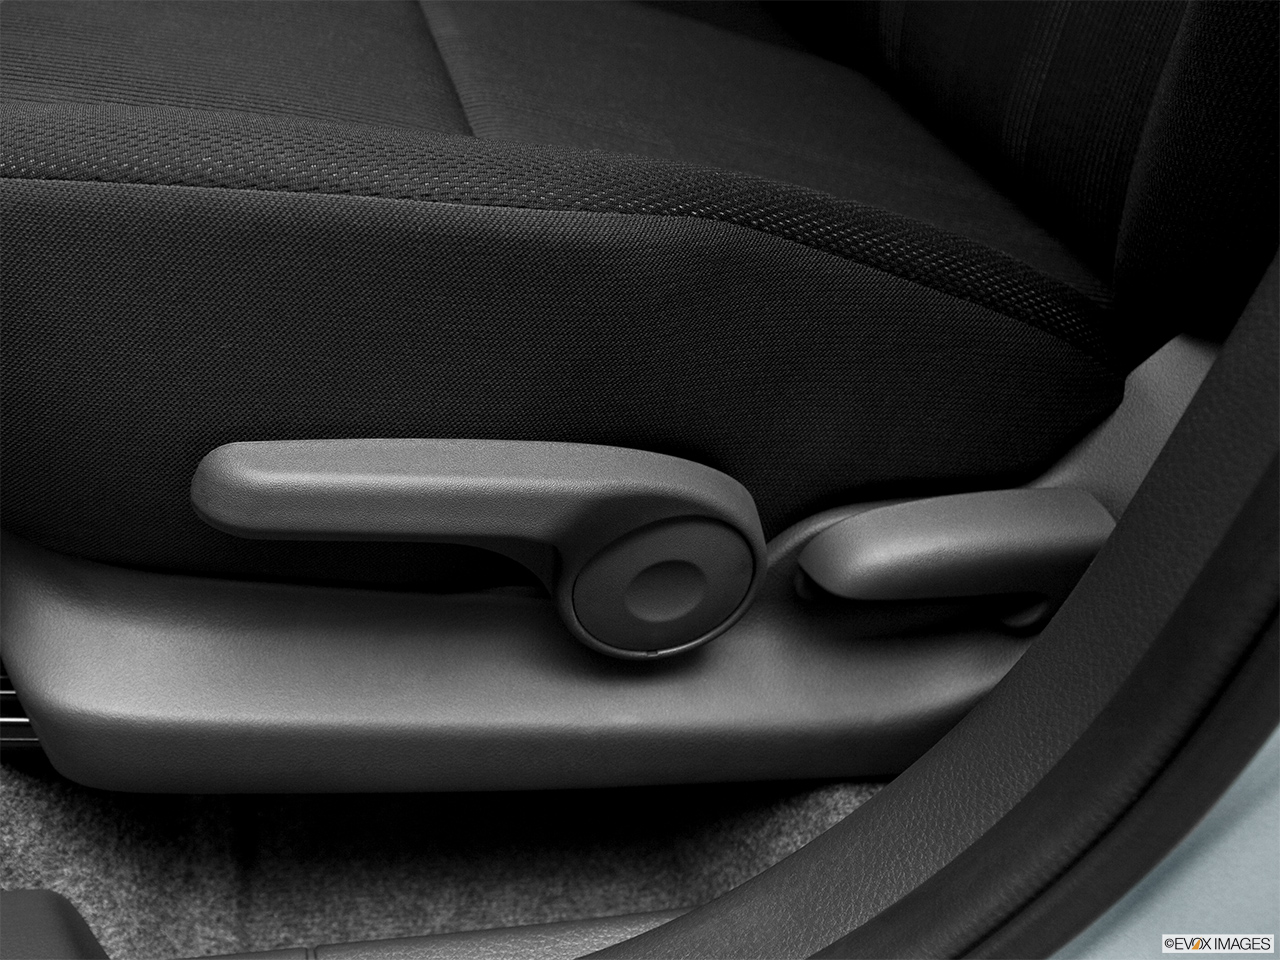 2011 Suzuki SX4 Sportback Technology Seat Adjustment Controllers. 